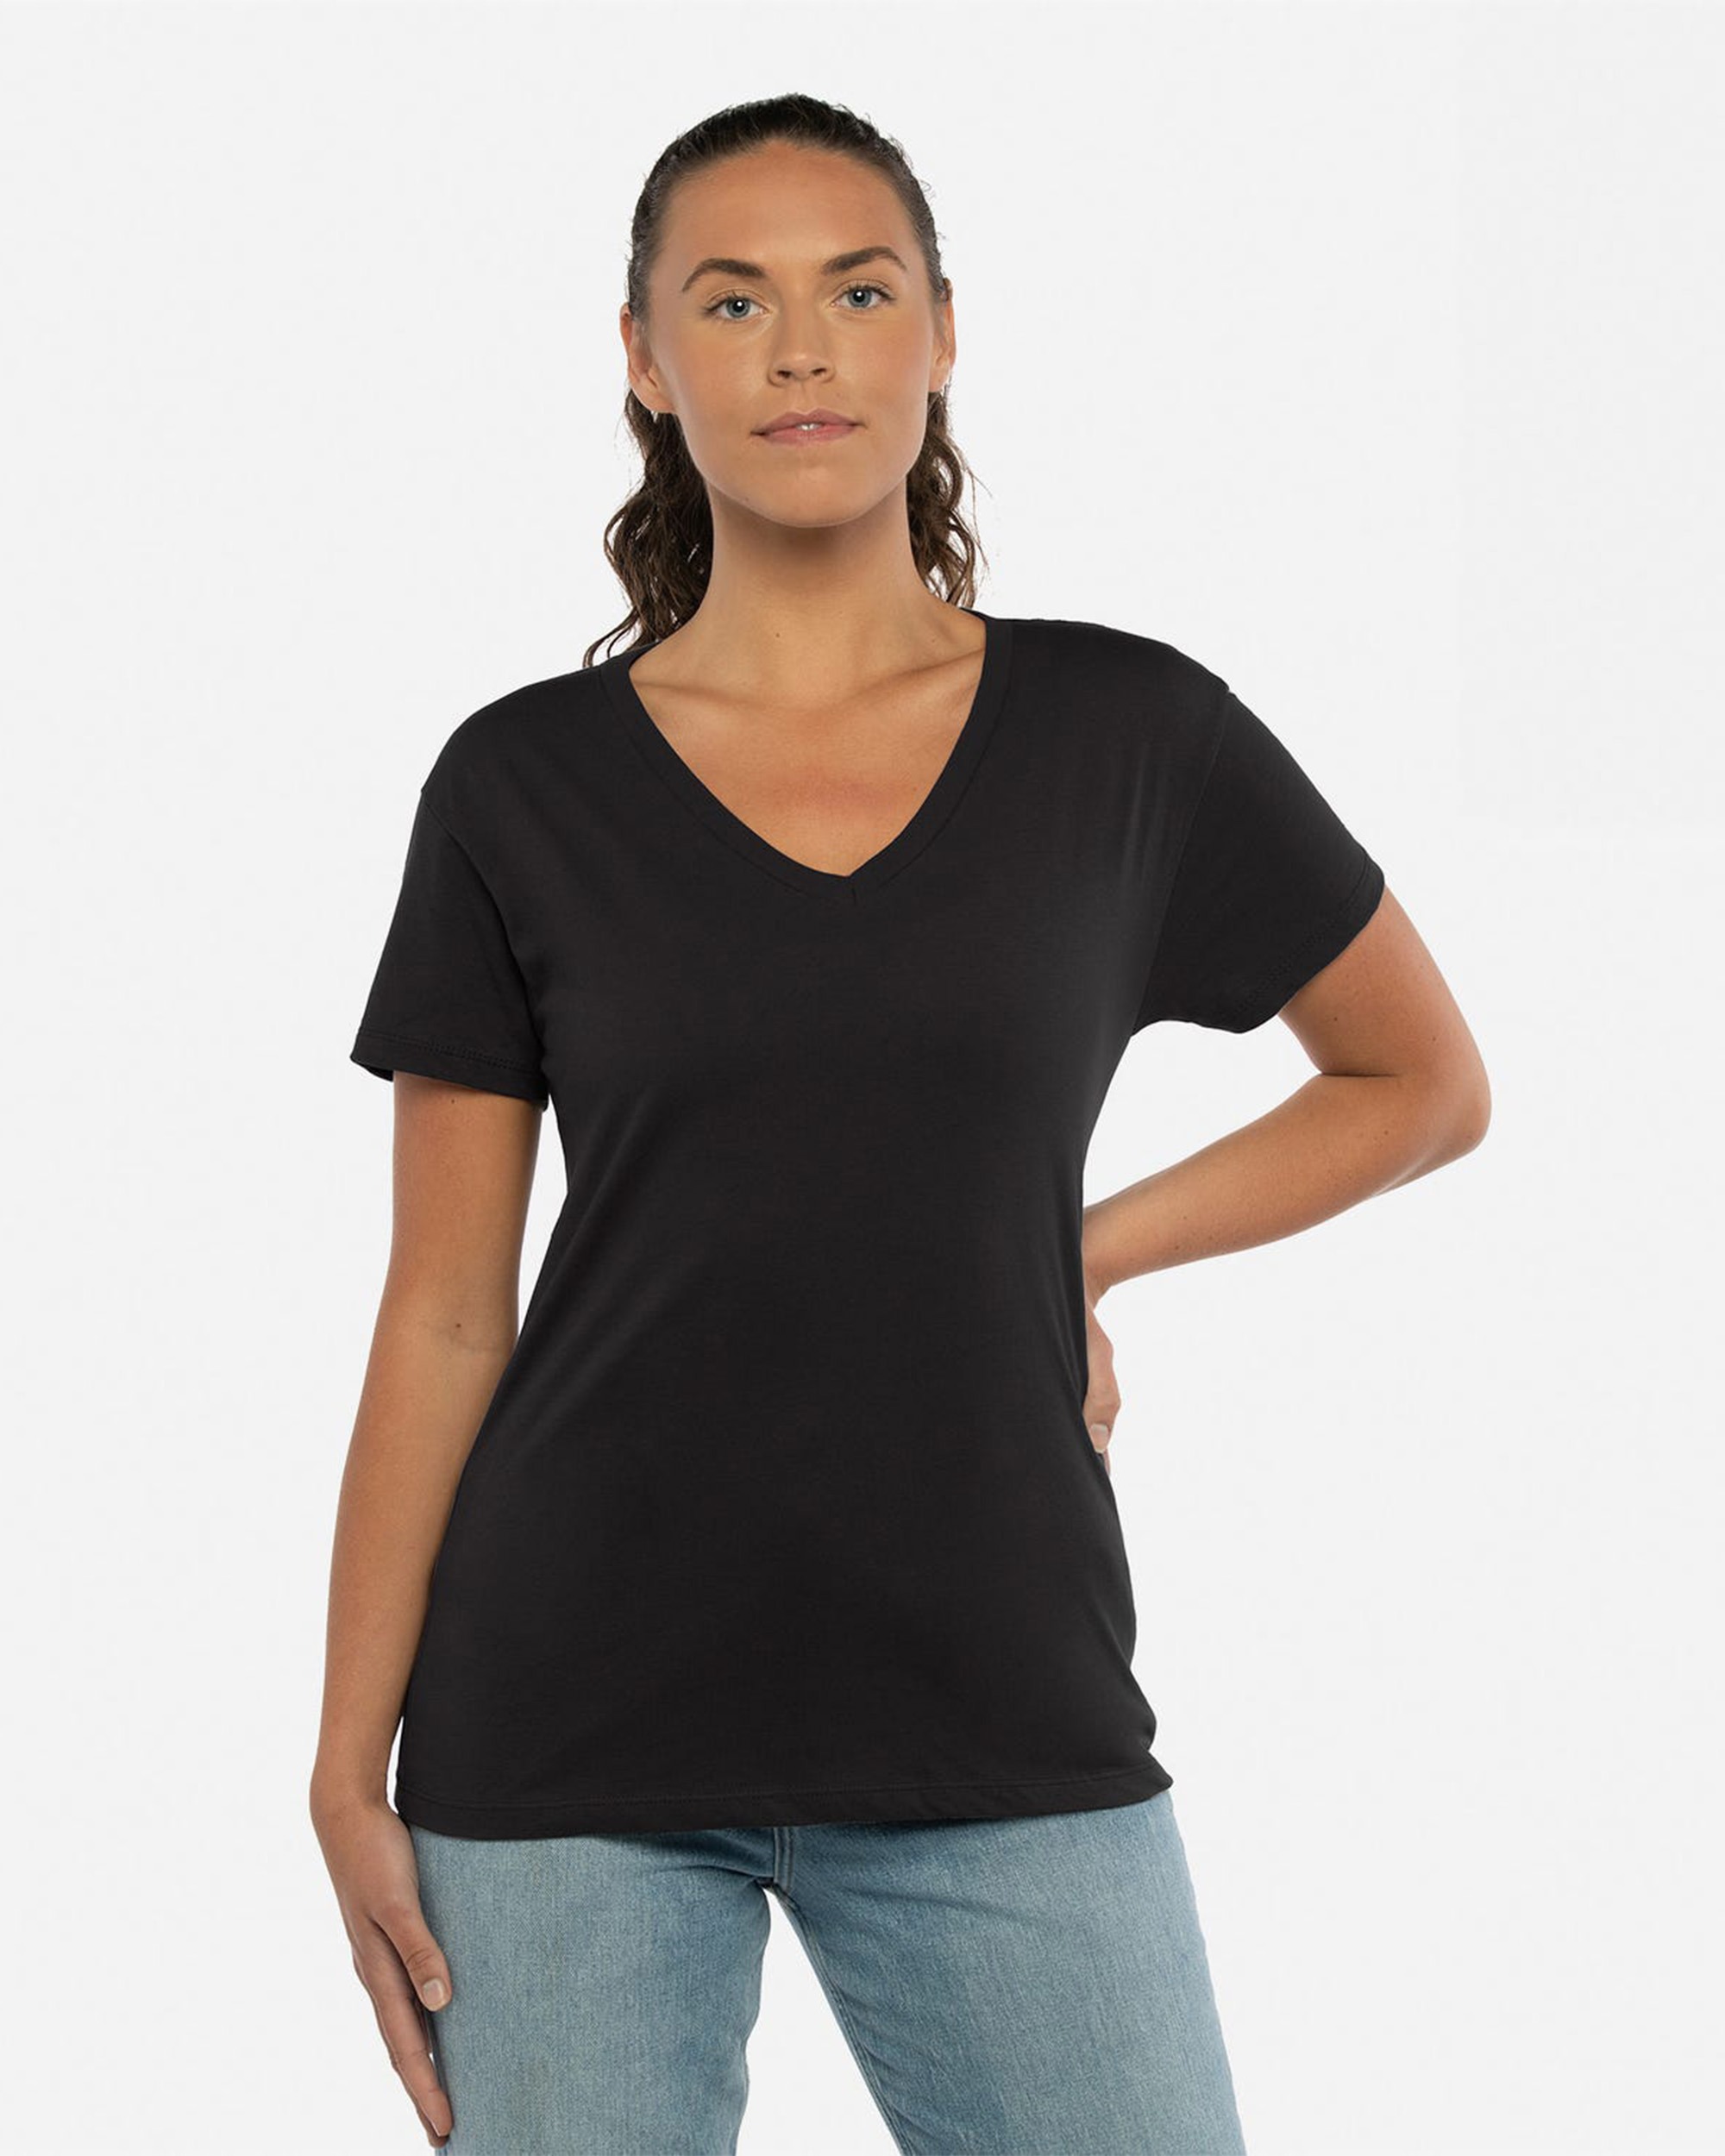 Next Level Apparel® 3940 Women's Cotton V-Neck T-Shirt